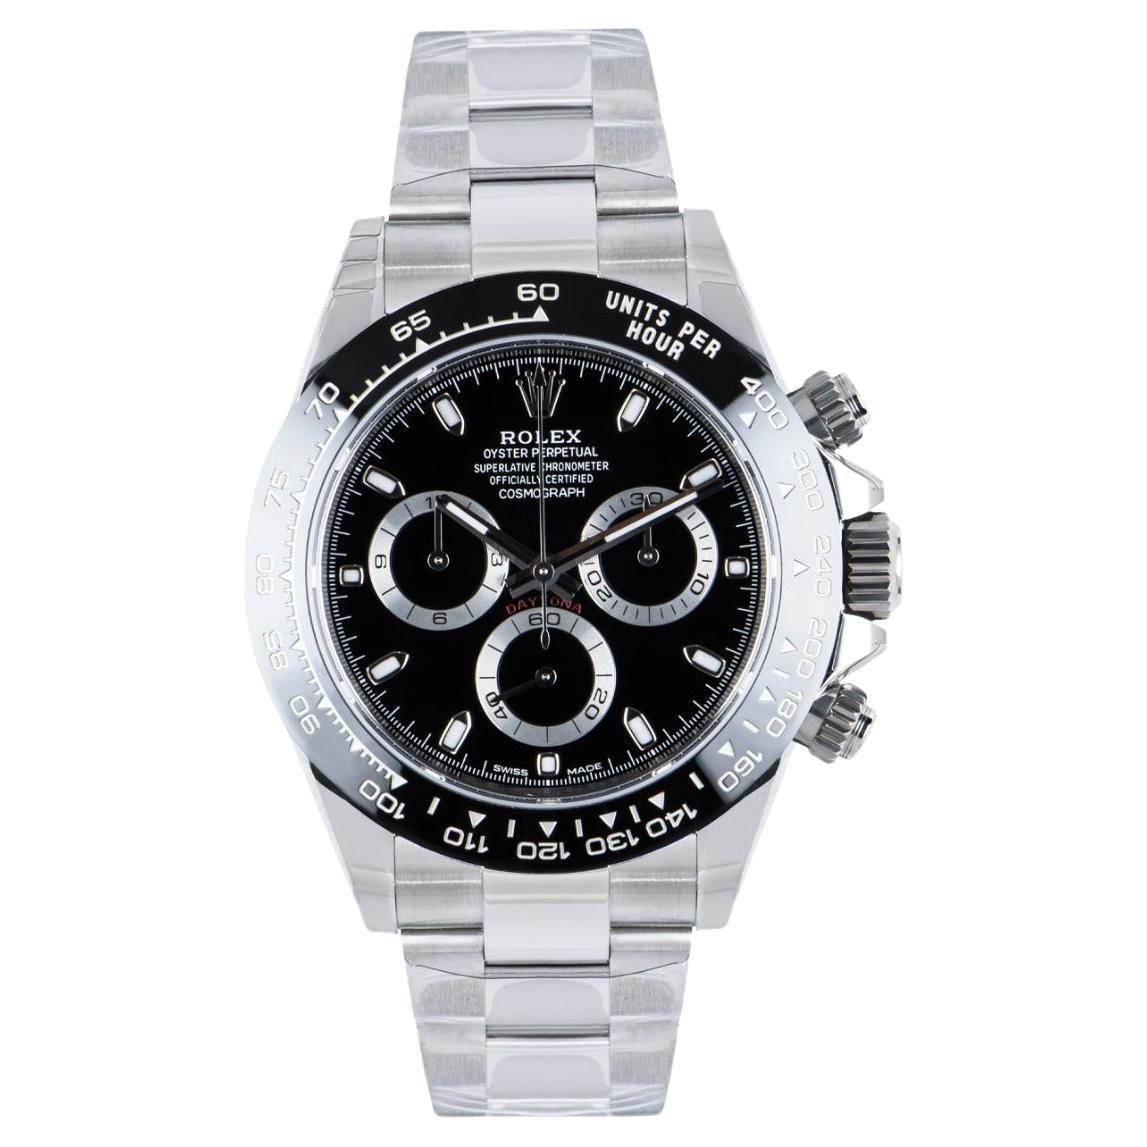 Did Rolex ever make an All Black Watch?